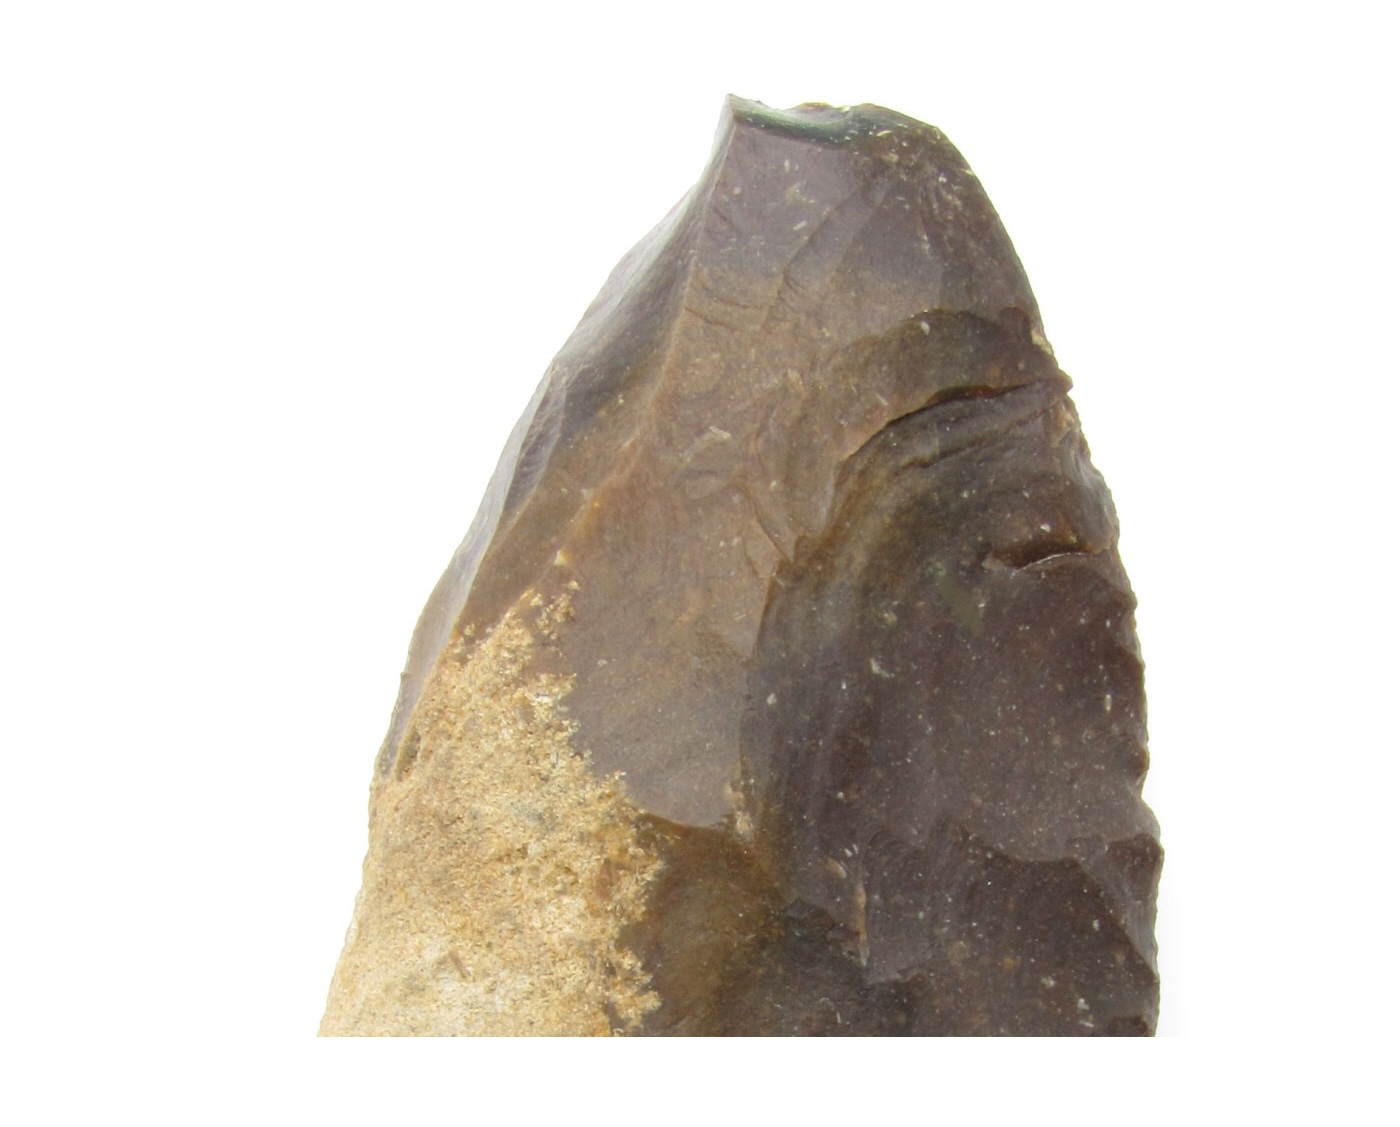 Stone artefact photo